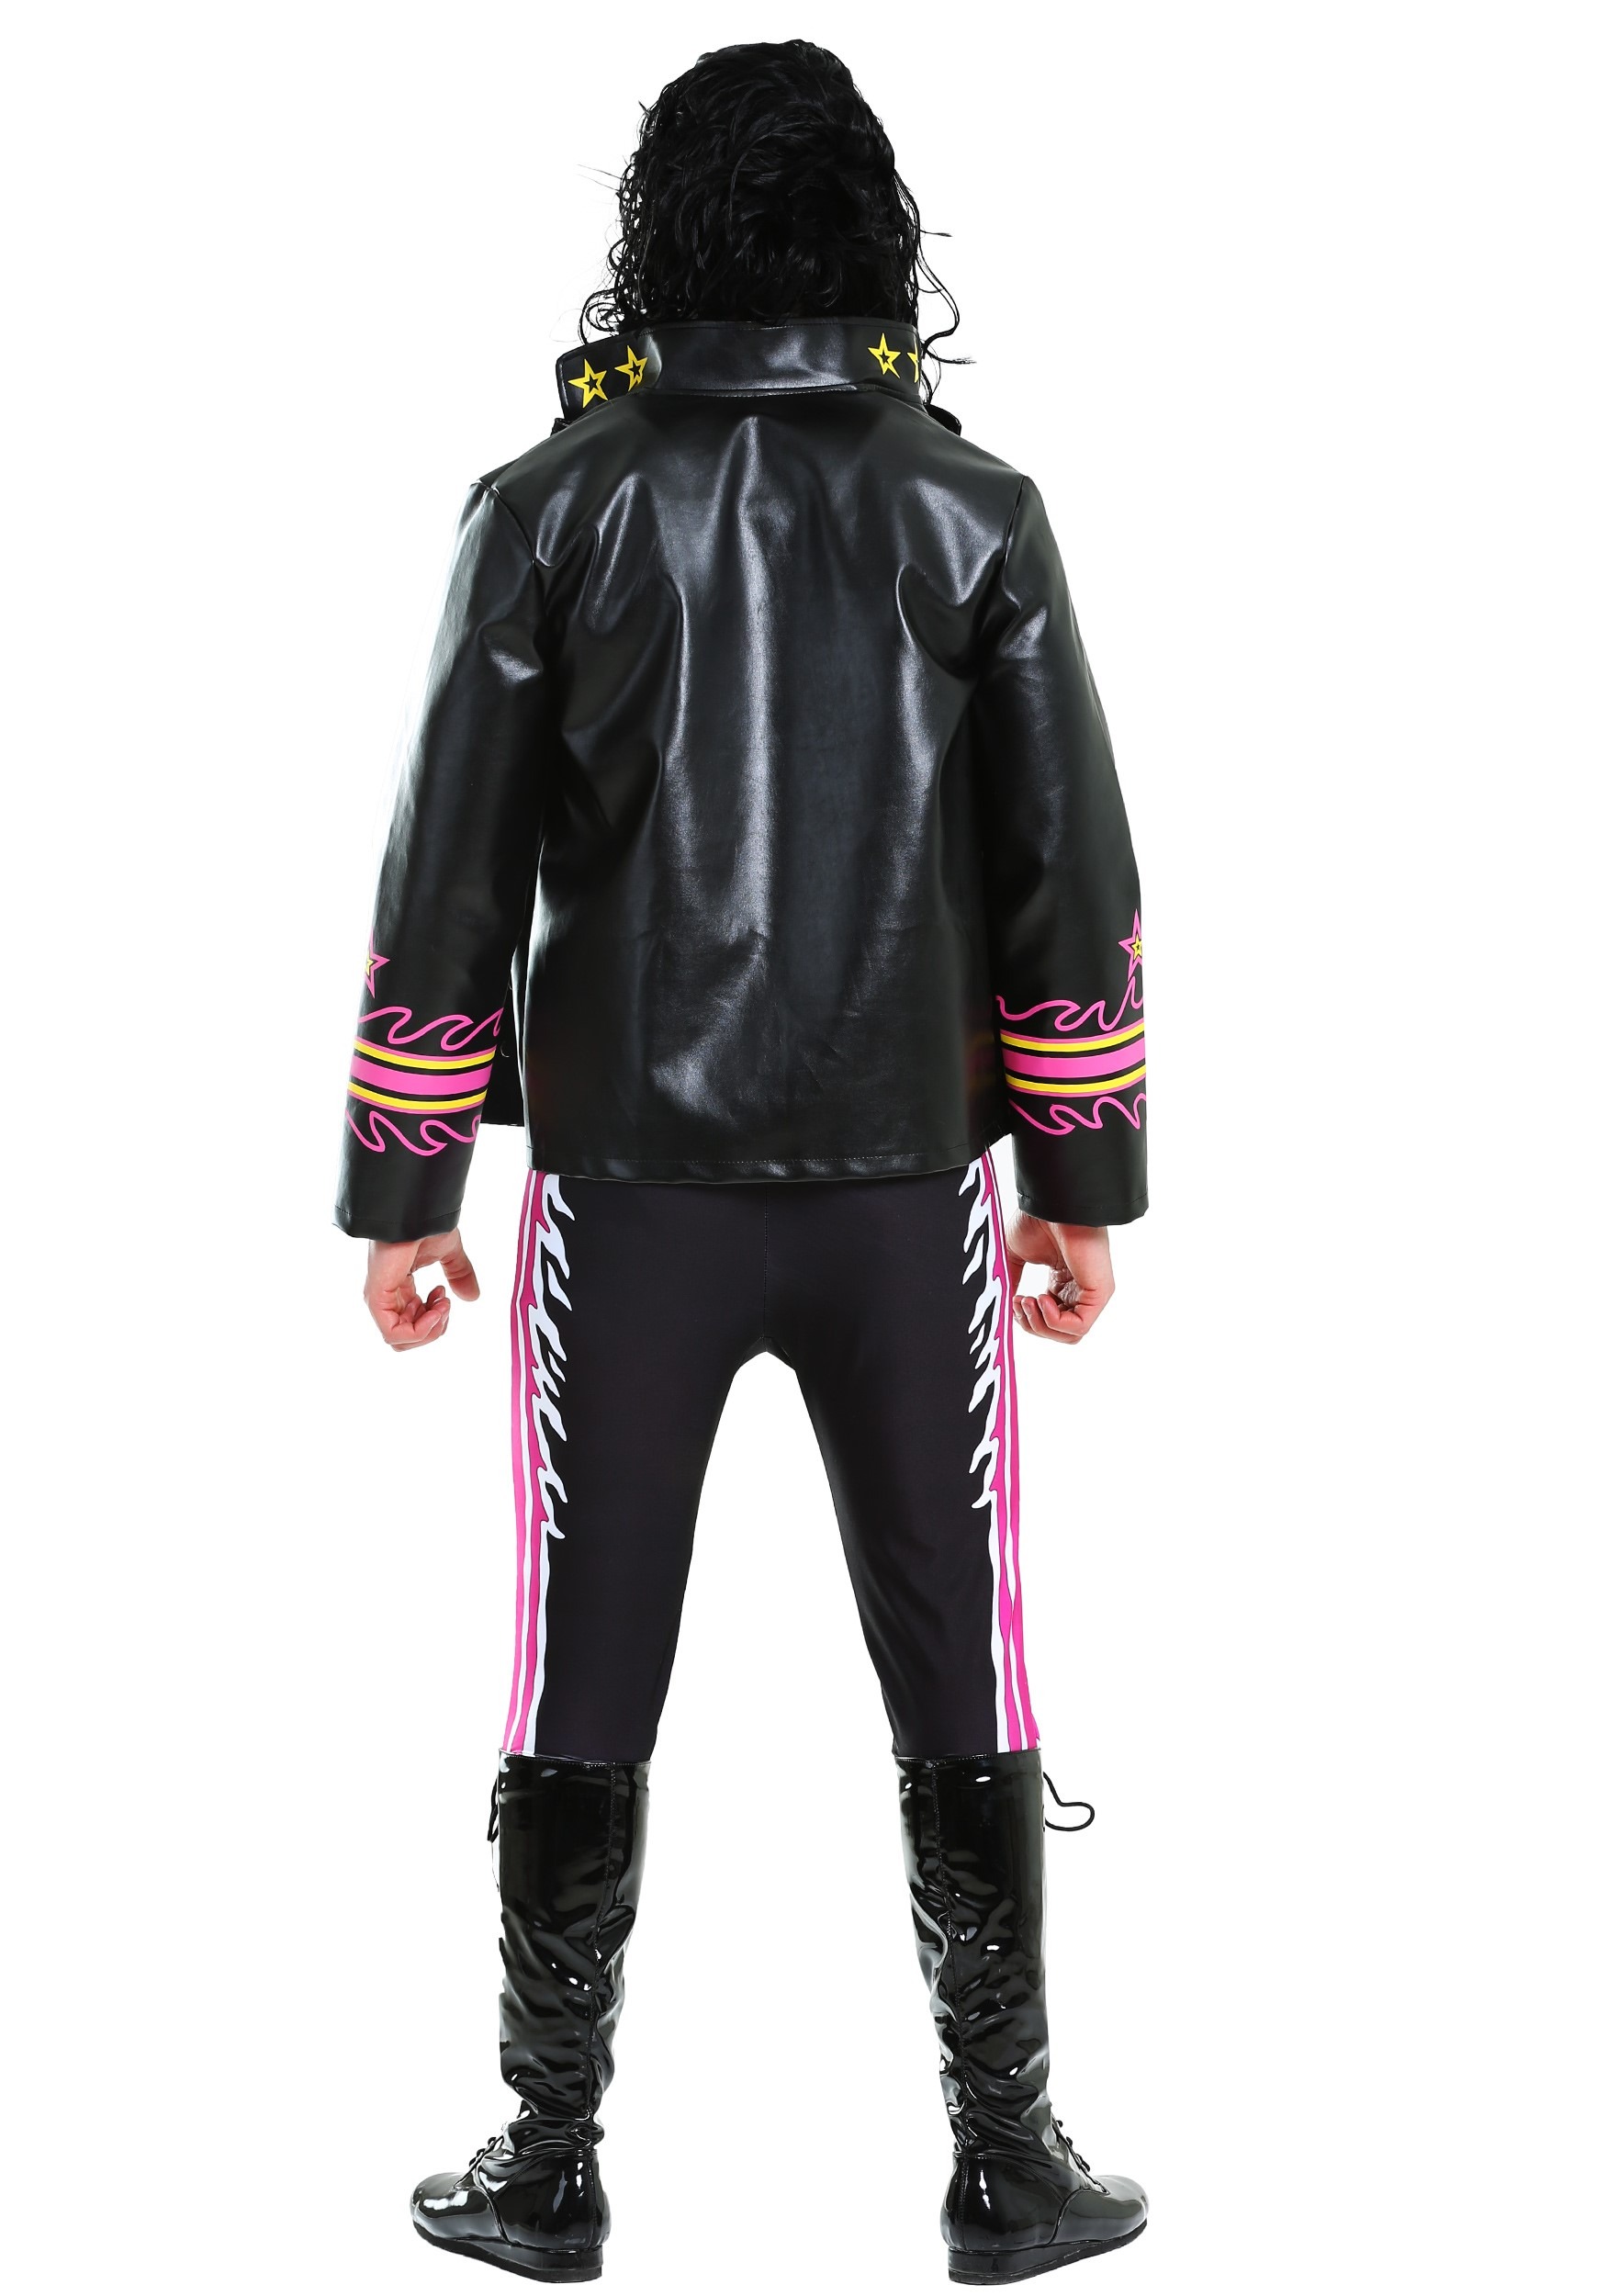 Men's WWE Adult Bret Hart Costume